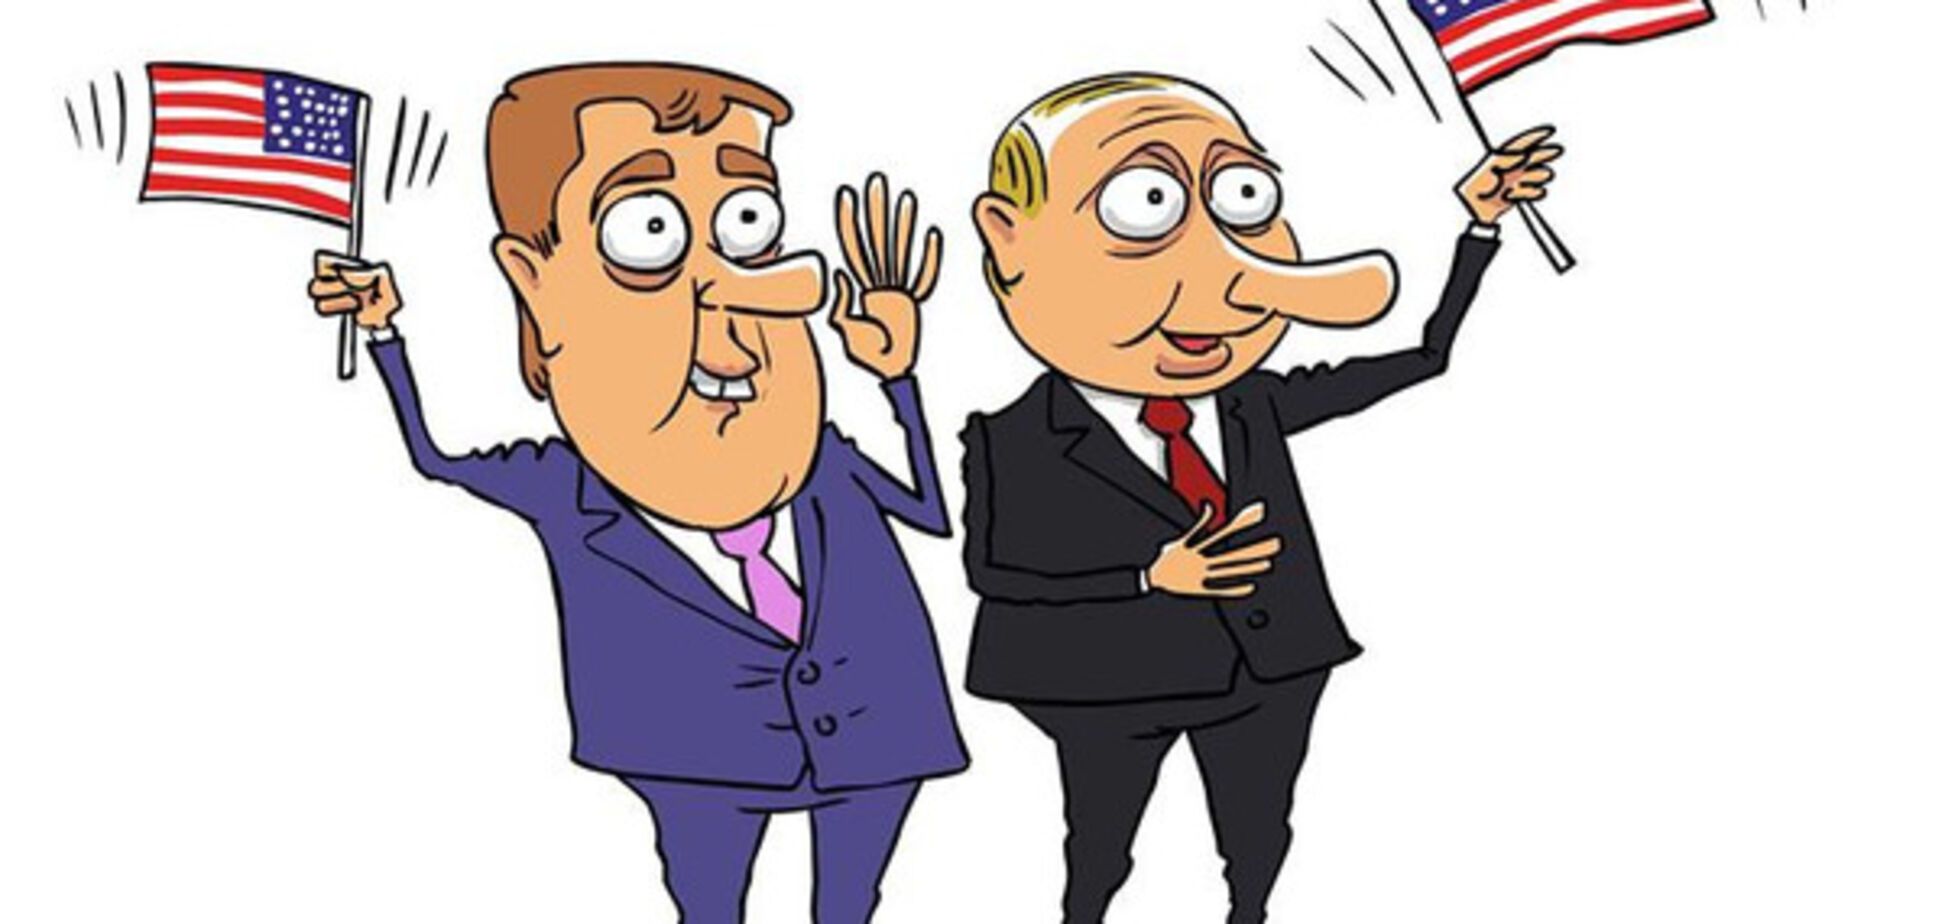 Вова и босс: художник нарисовал карикатуру на Путина и Трампа